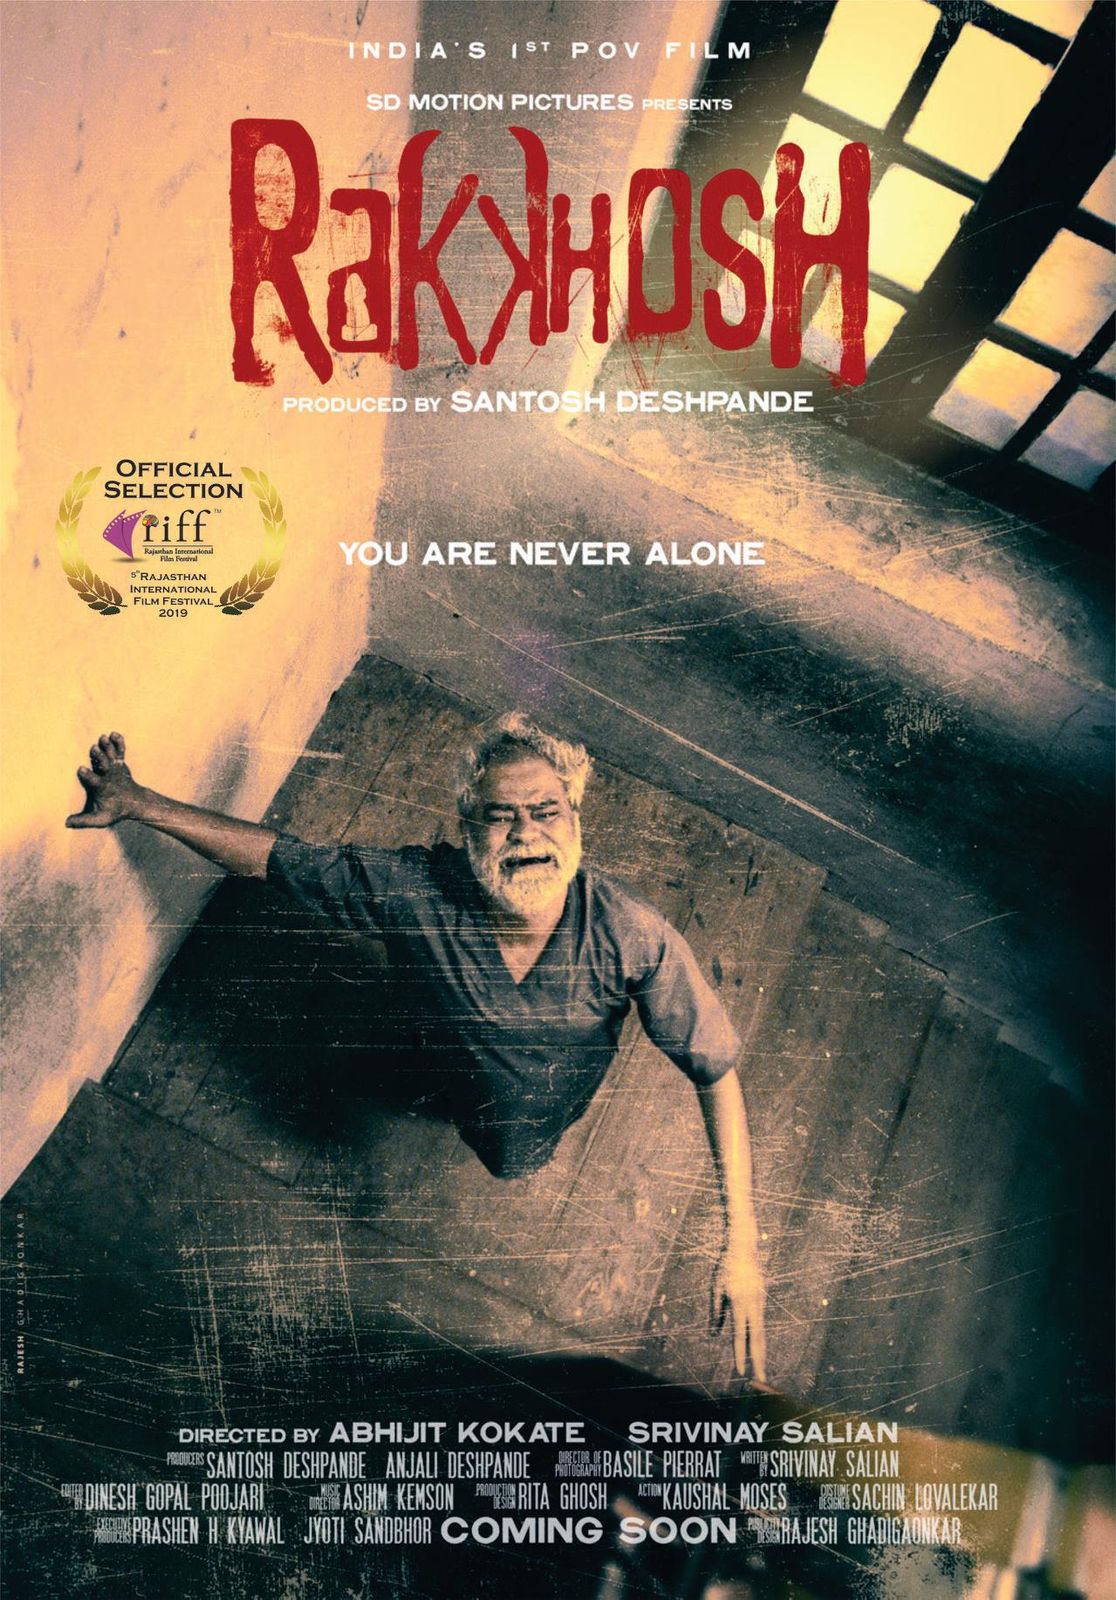 Cinephiles, Artists Laud Sanjay Mishra's Rakkhosh; India's First POV Film